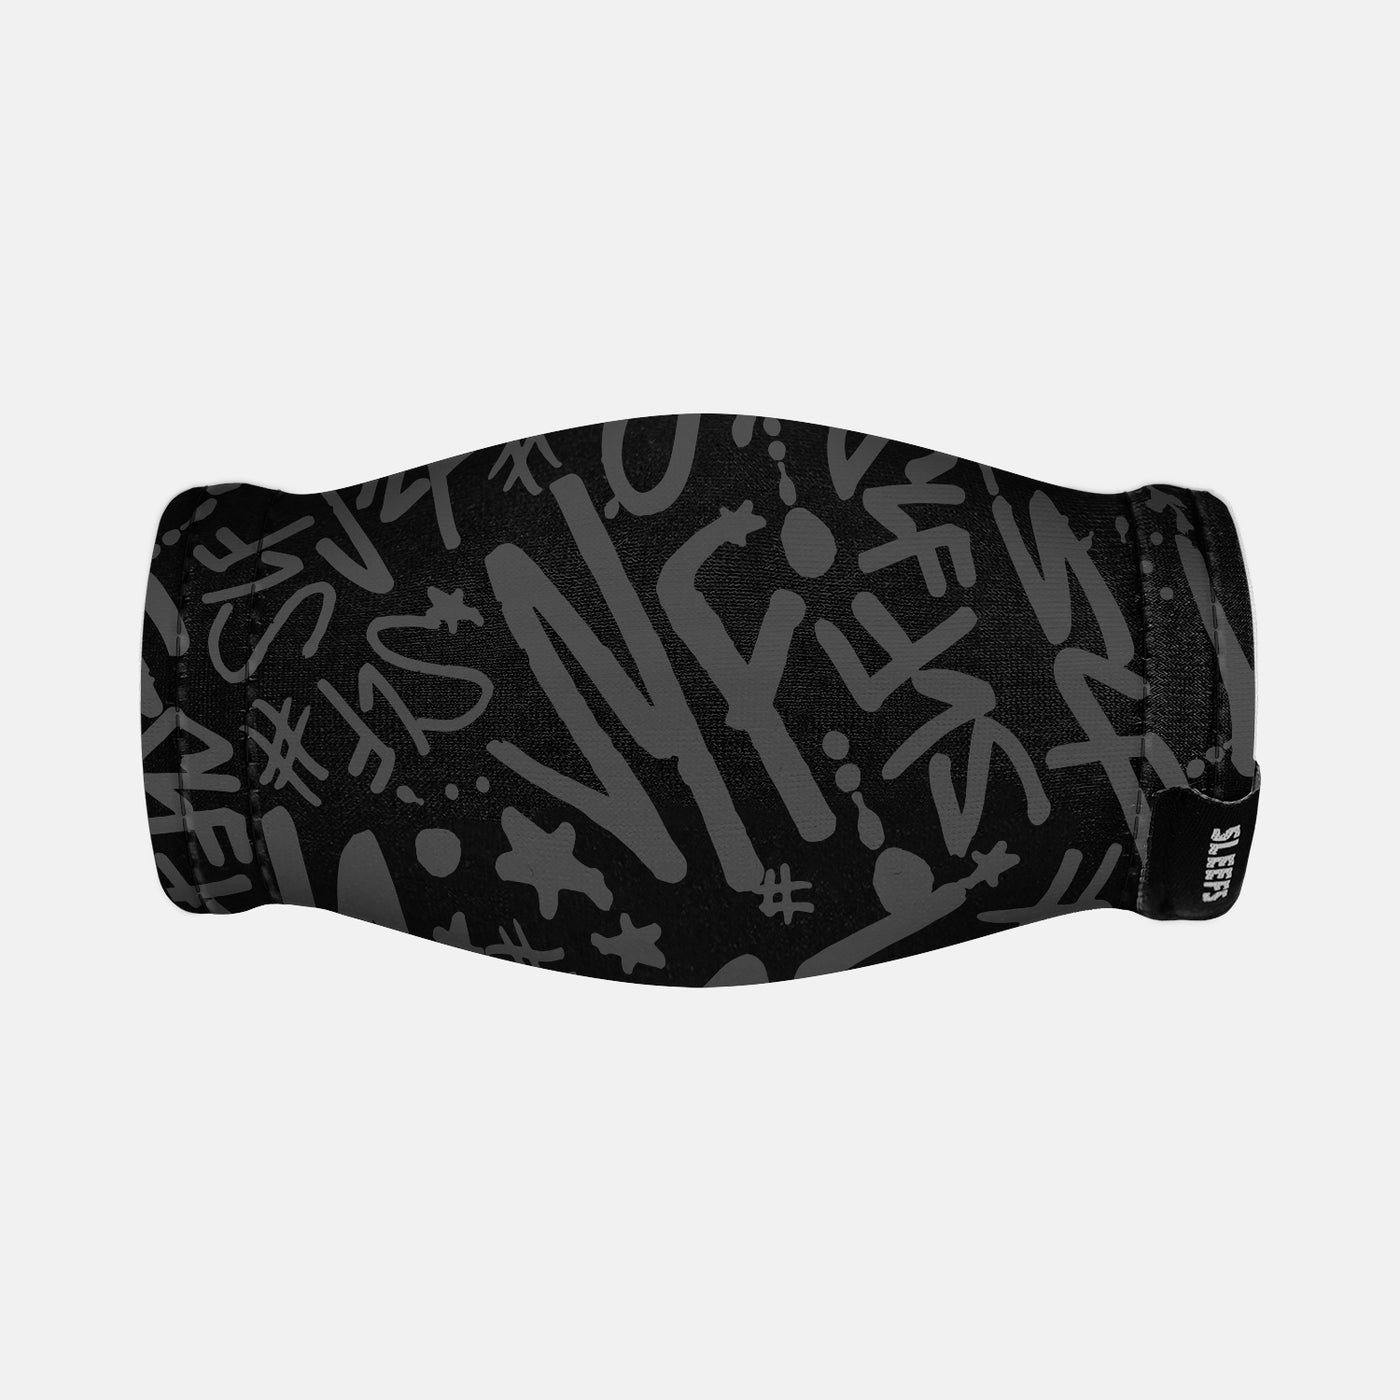 Sleefs Graffiti Tactical Chin Strap Cover